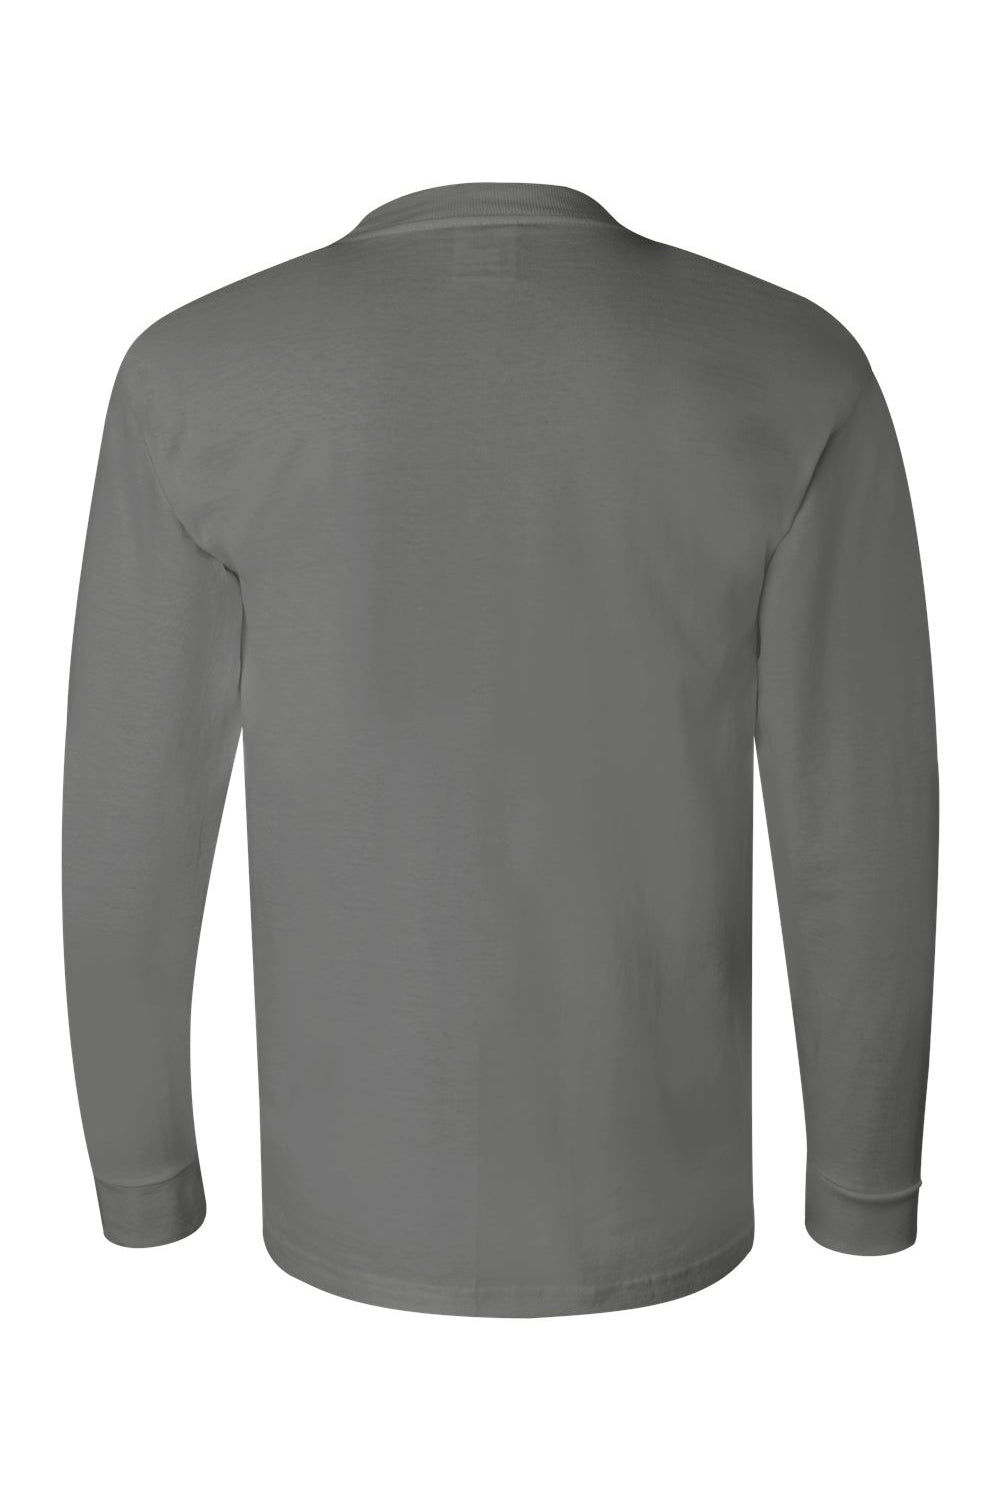 Bayside BA6100 Mens USA Made Long Sleeve Crewneck T-Shirt Charcoal Grey Flat Back